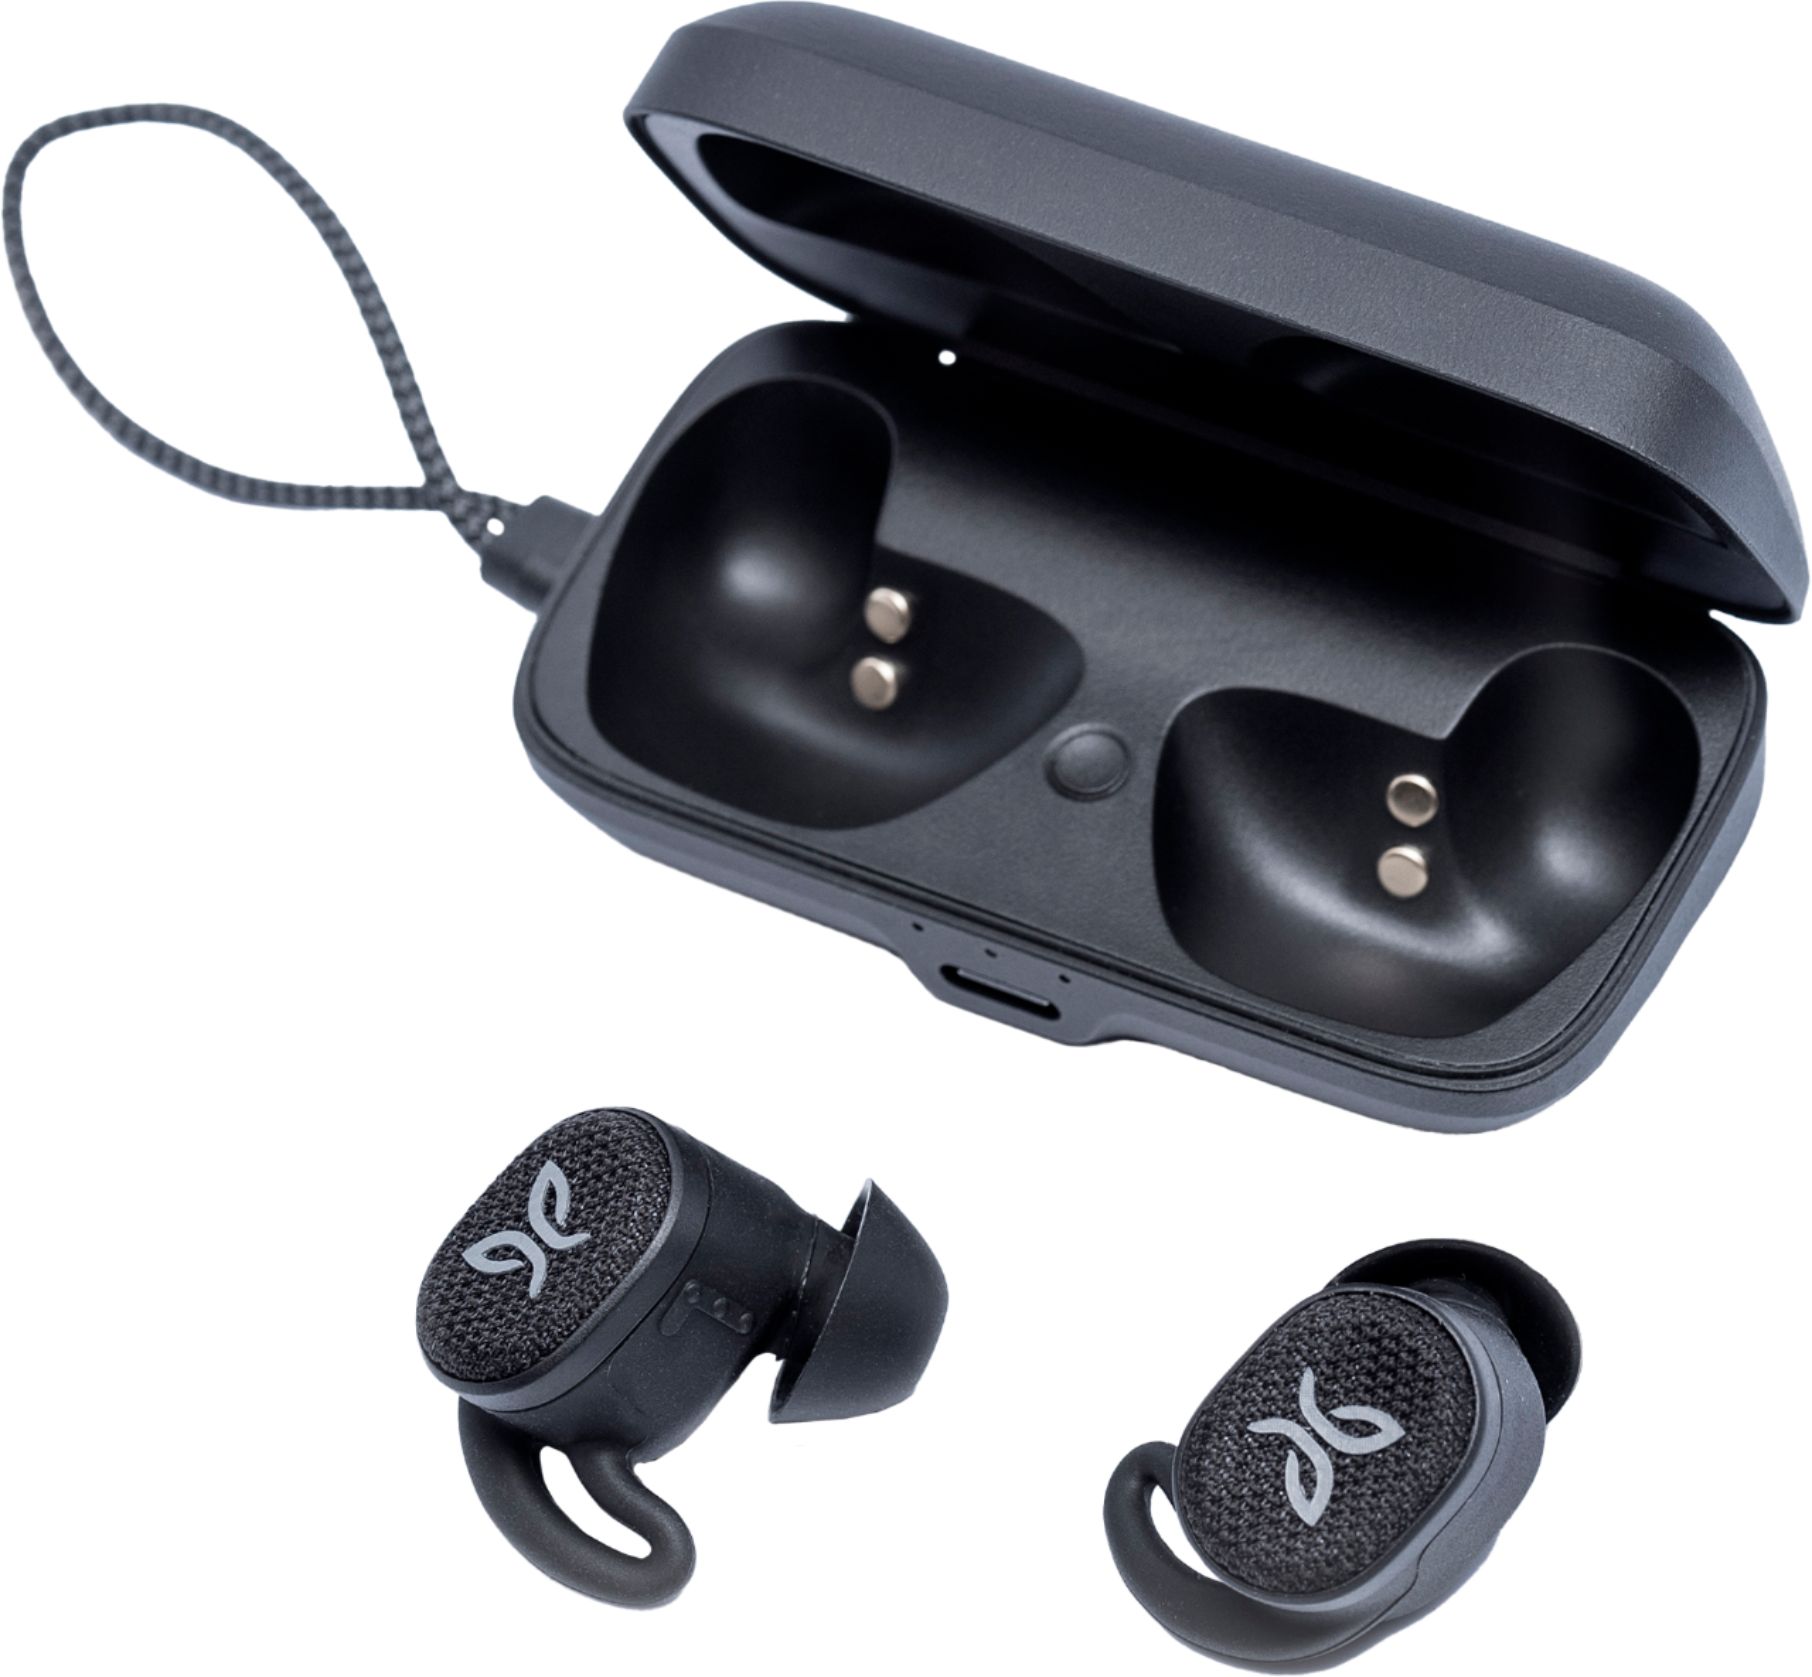 Angle View: Jaybird - Vista 2 True Wireless Noise Cancelling In-Ear Headphones - Black